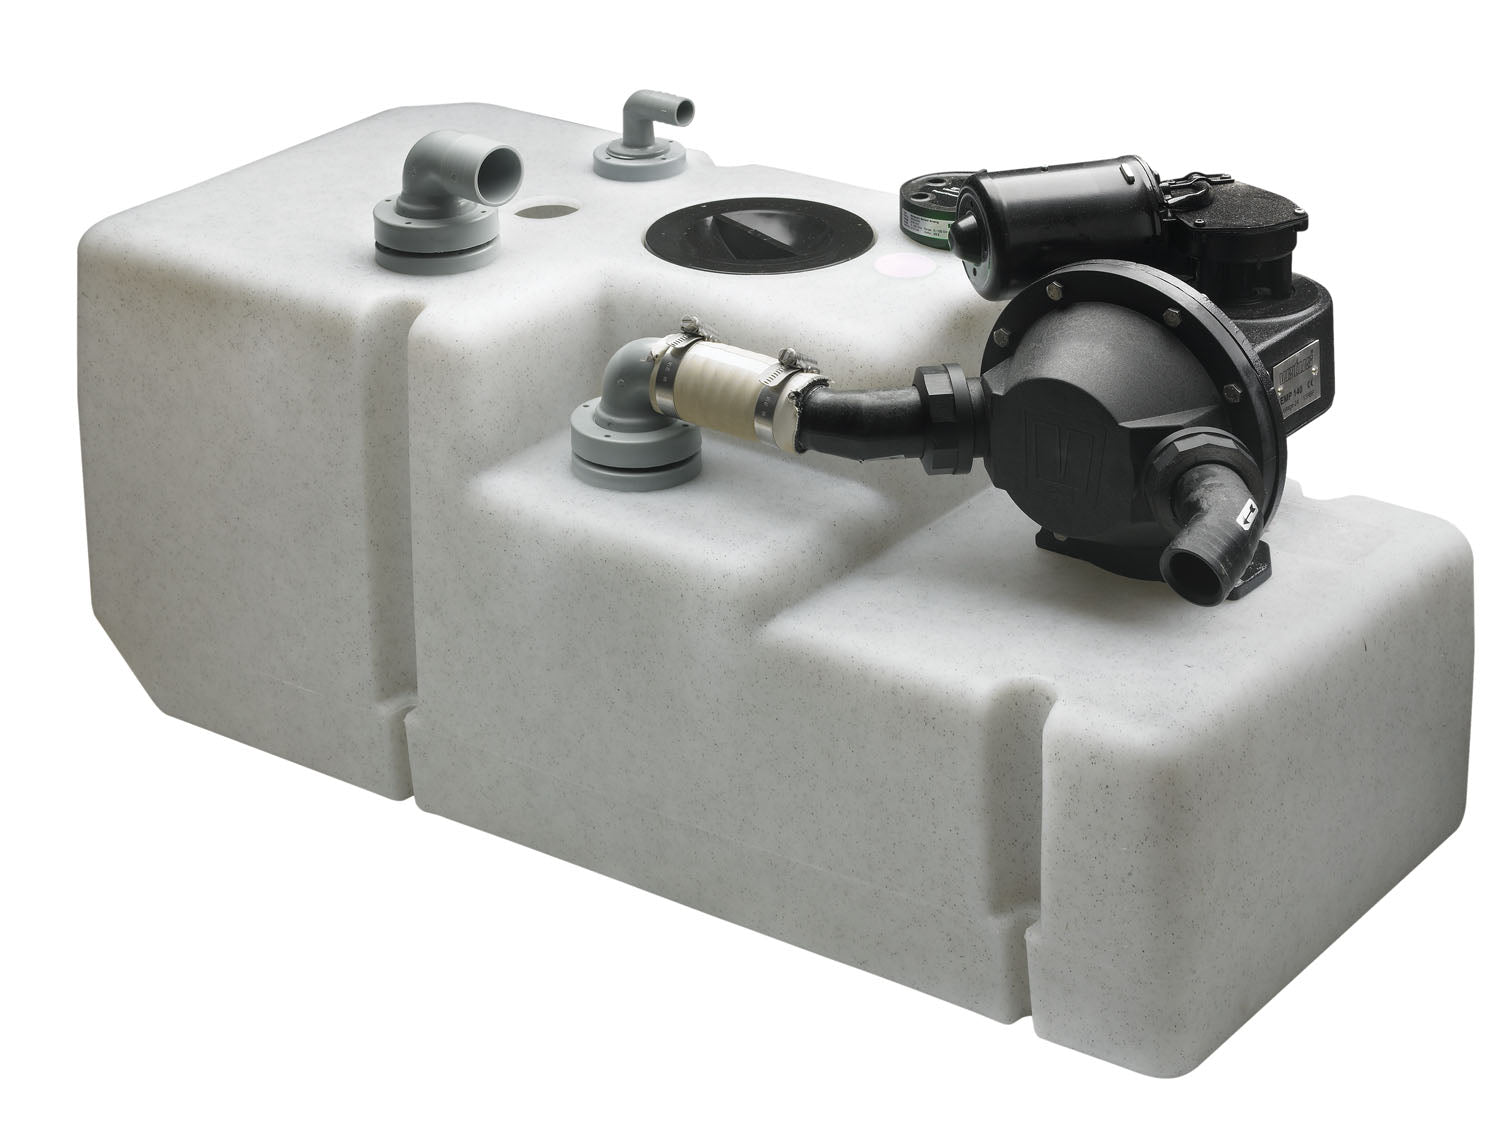 Vetus WWS8812B - Wastewater system 88 L 12V, incl pump, sensor